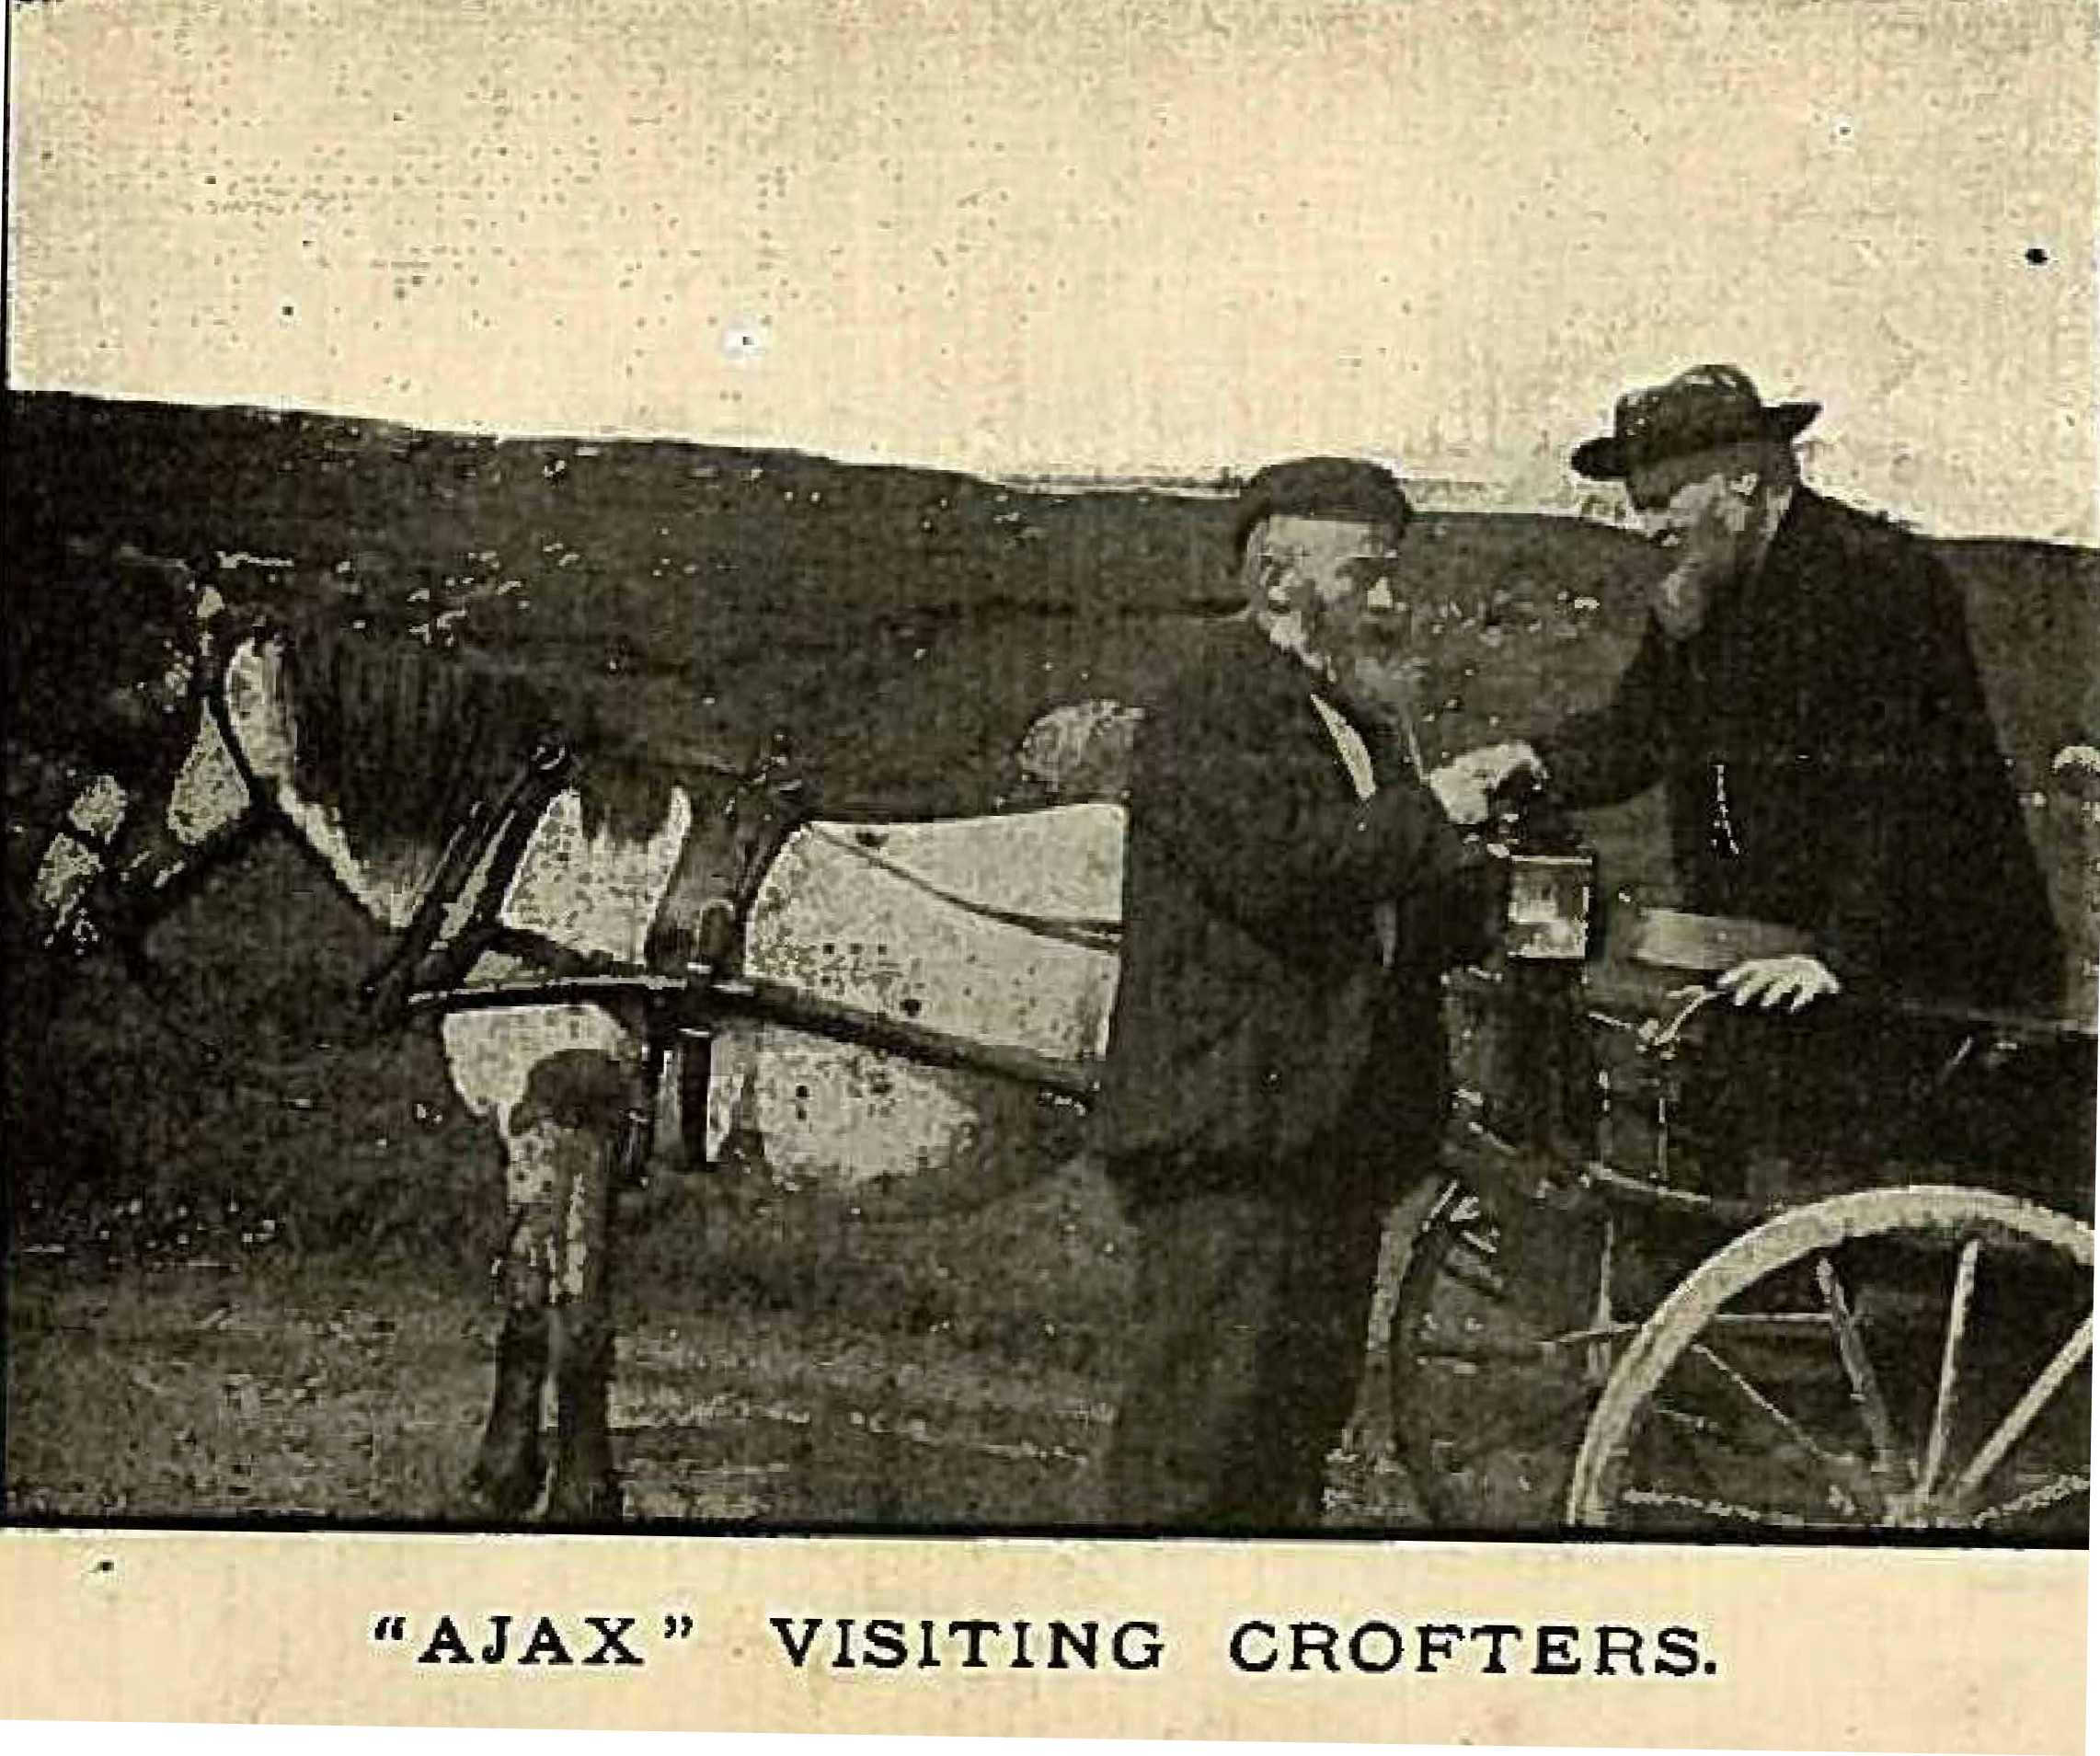 Ajax (Rev. Donald MacCallum) visiting a crofter